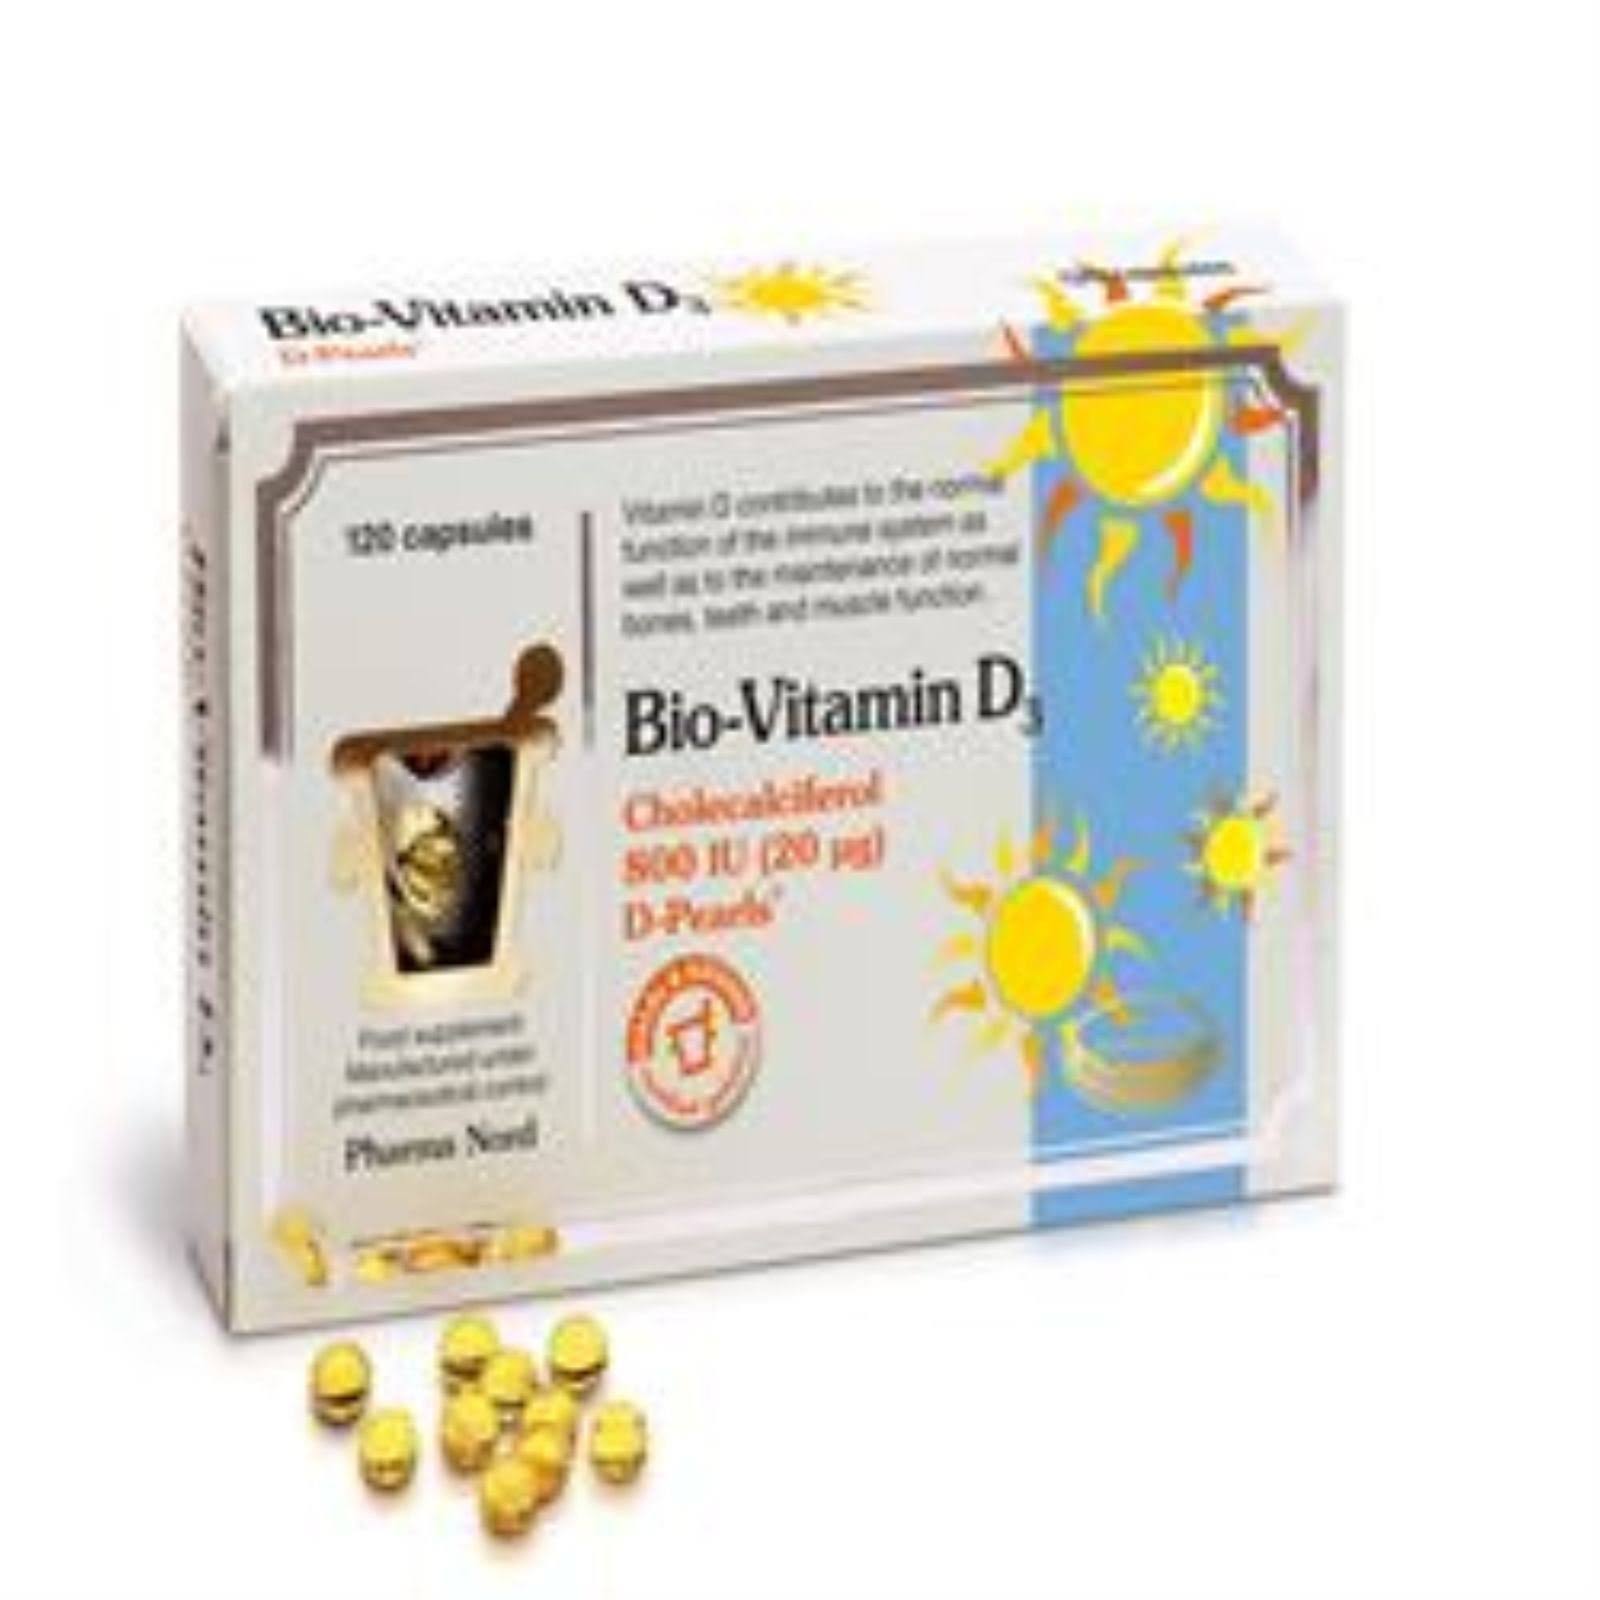 Pharma Nord Bio-Vitamin D3 Supplement - 20mcg, 800iu, 120ct